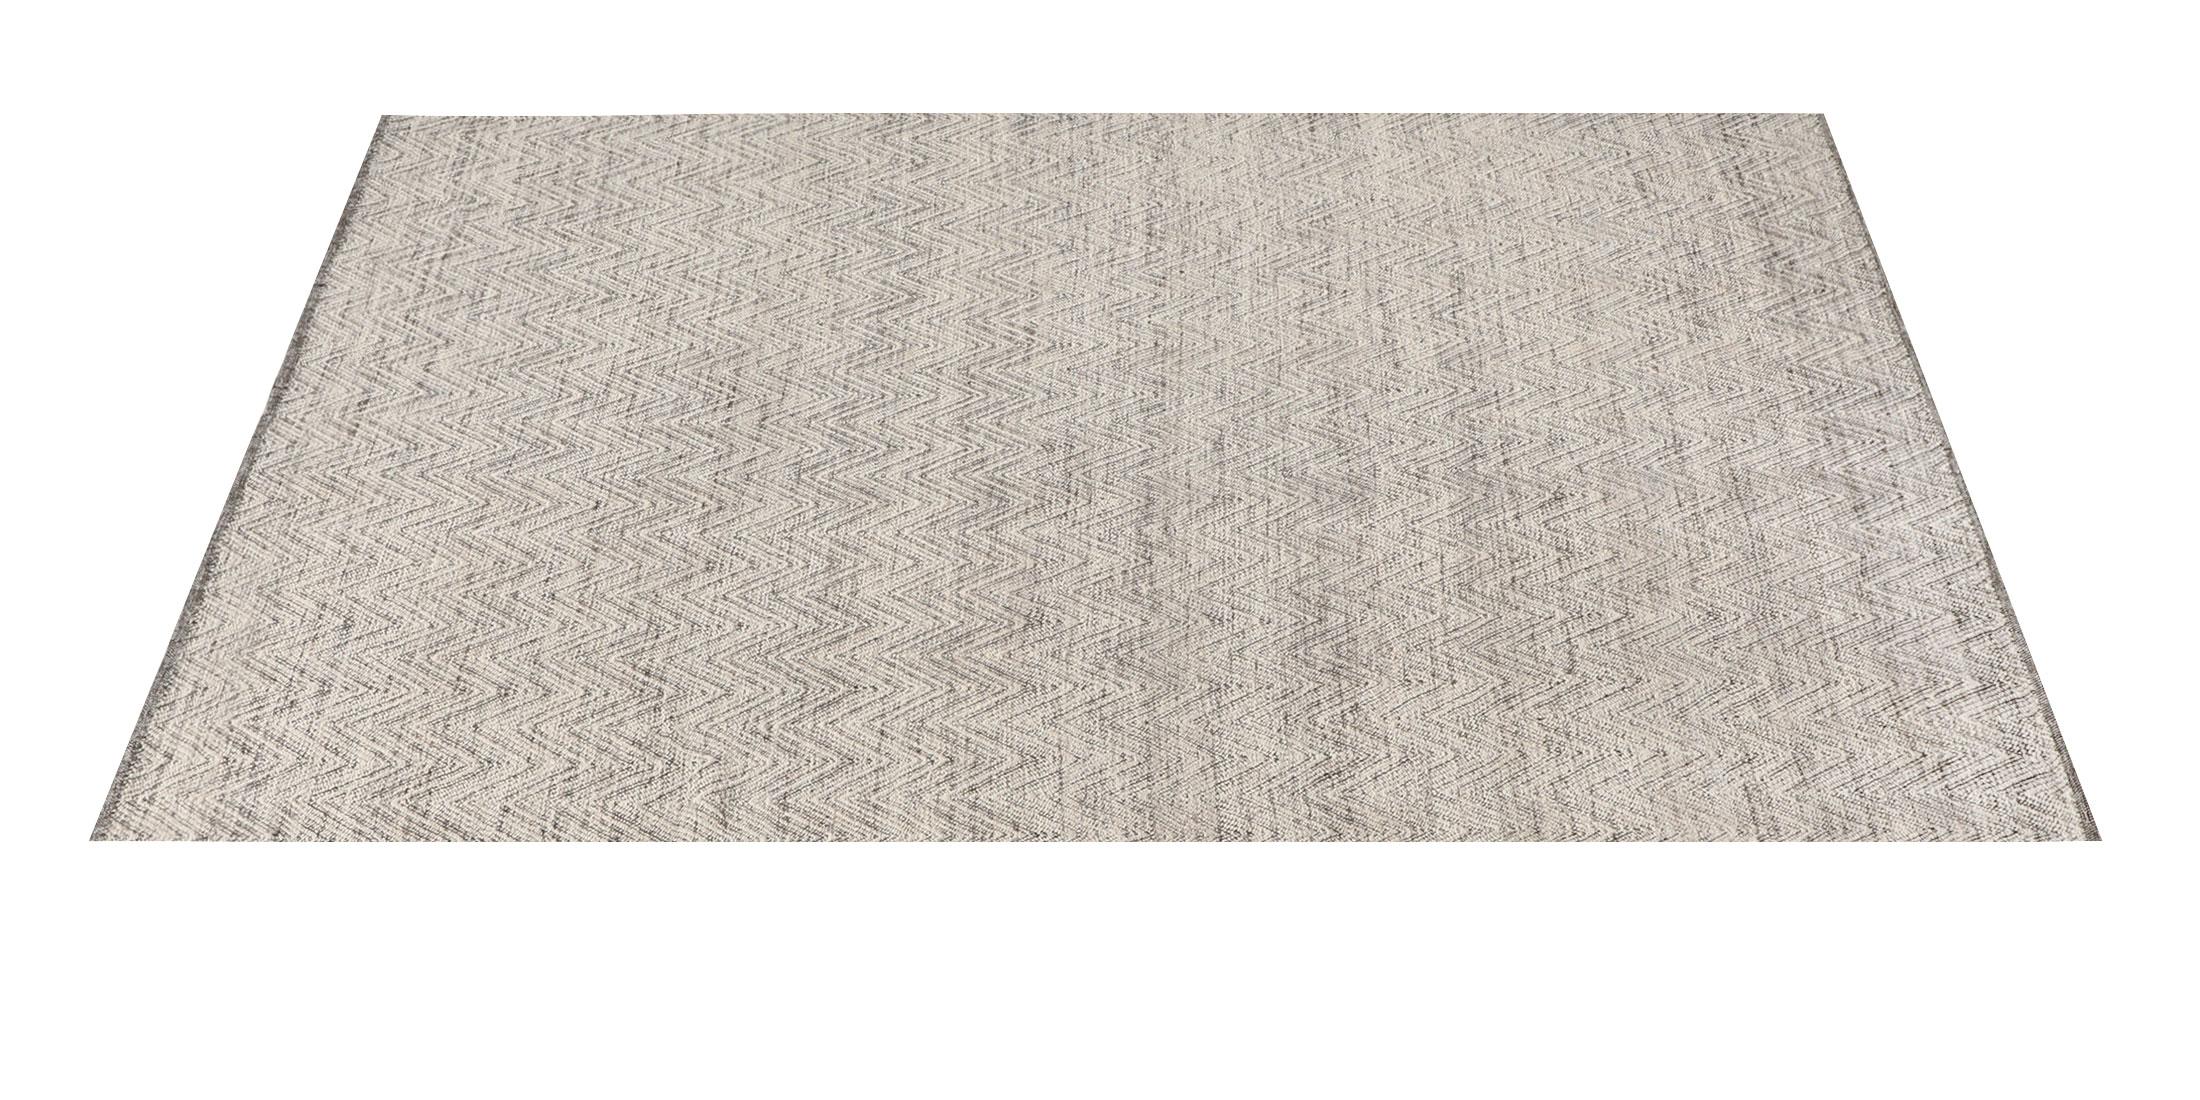 For Sale: Silver Ben Soleimani Ceyah Rug– Hand-woven Plush Textured Wool + Linen Charcoal 6'x9' 2